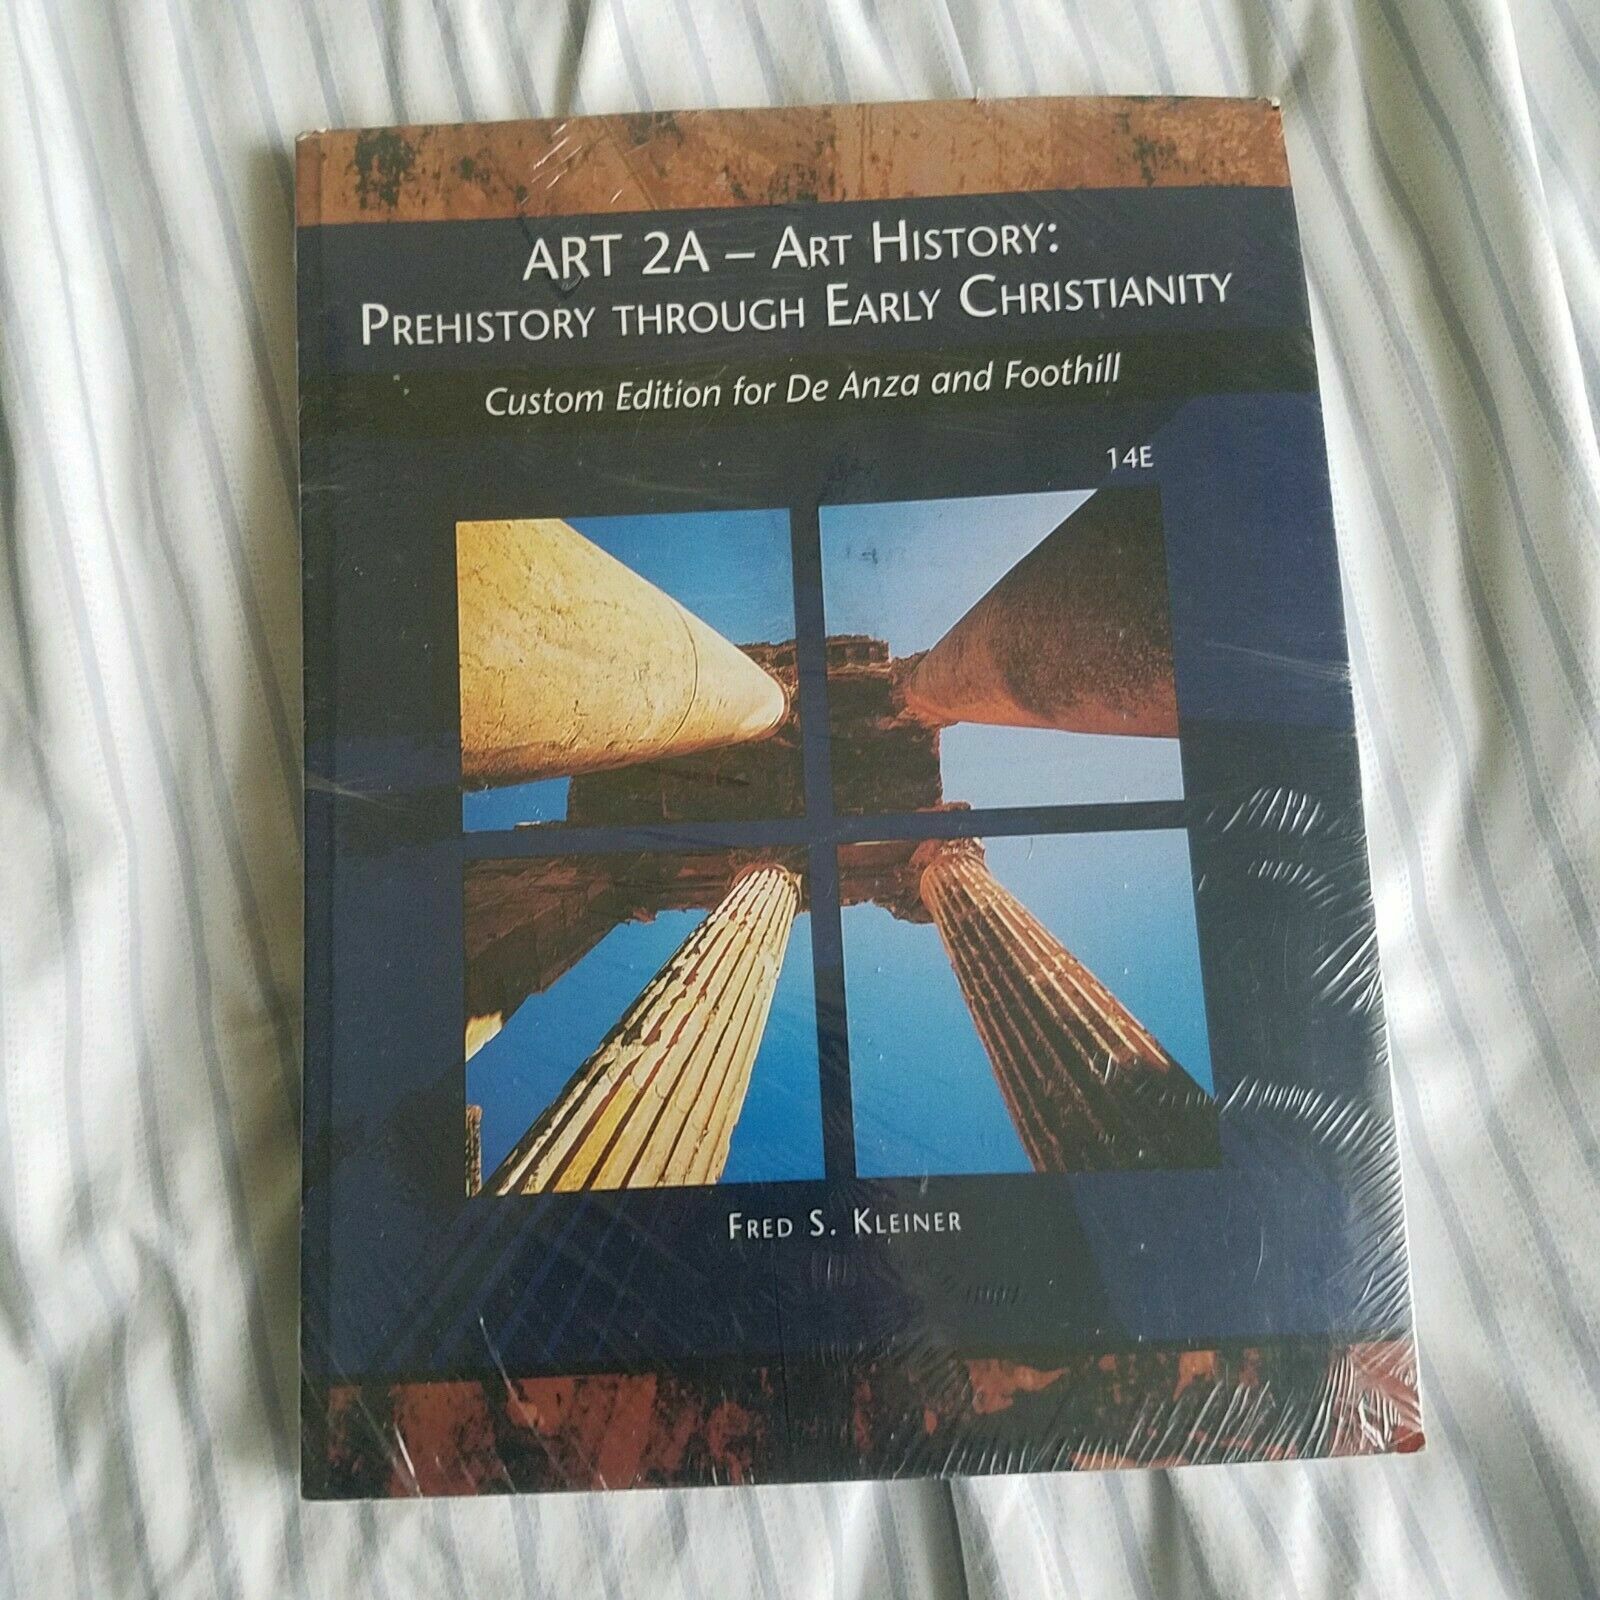 Art 2A - Art history: Prehistory through early christianity 14E